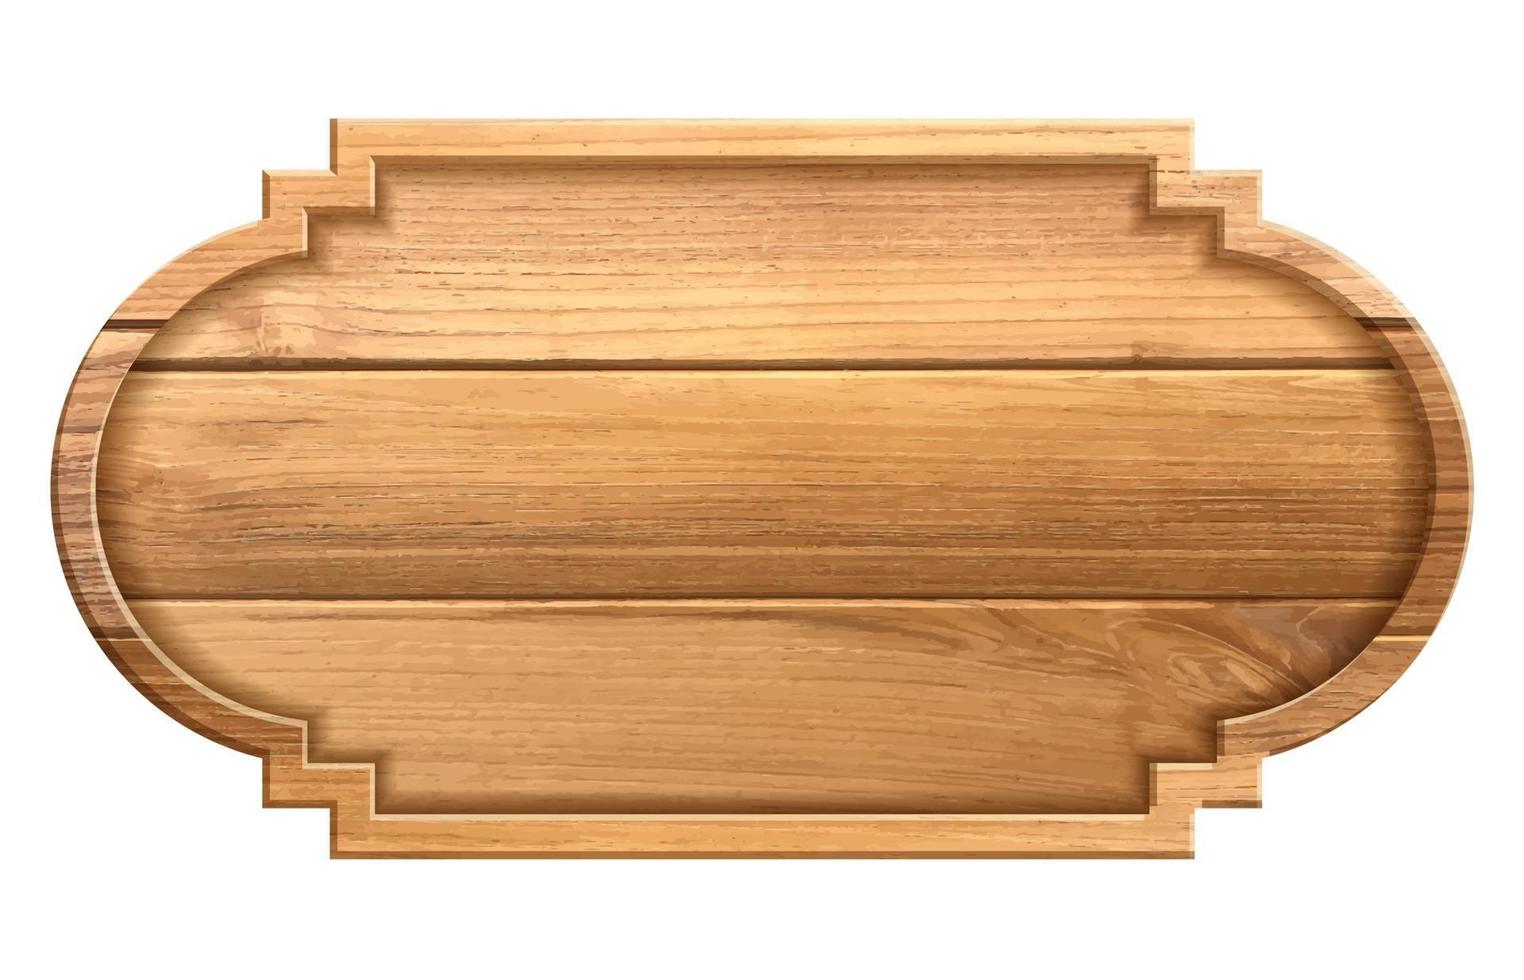 Signo de textura de madera aislado sobre fondo blanco. ilustración vectorial vector